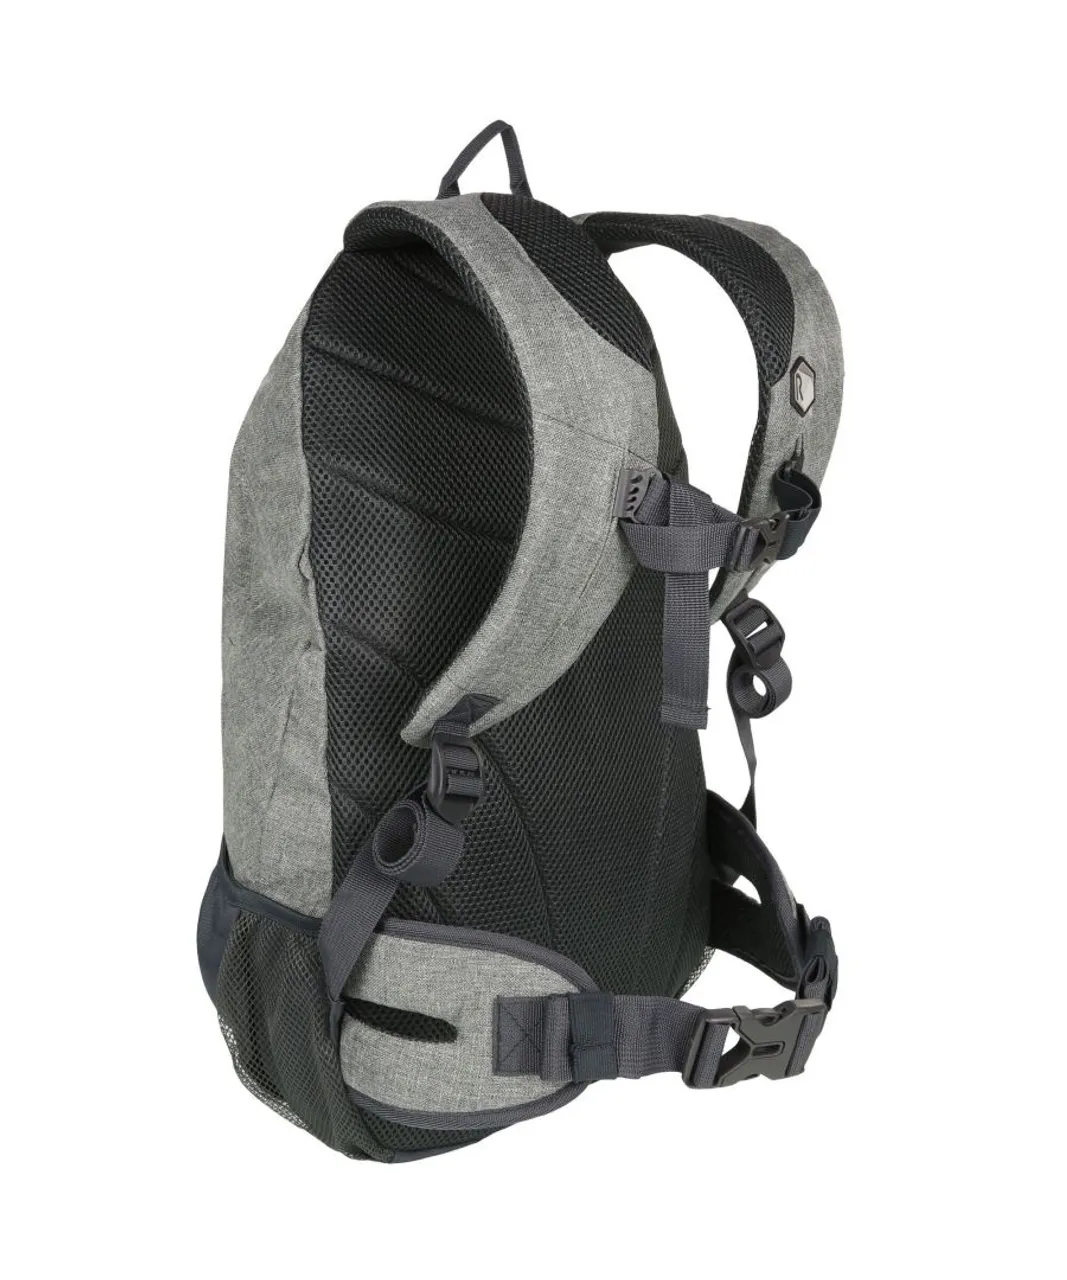 Regatta Unisex 35 Litre Atholl II Backpack - Grey - One Size